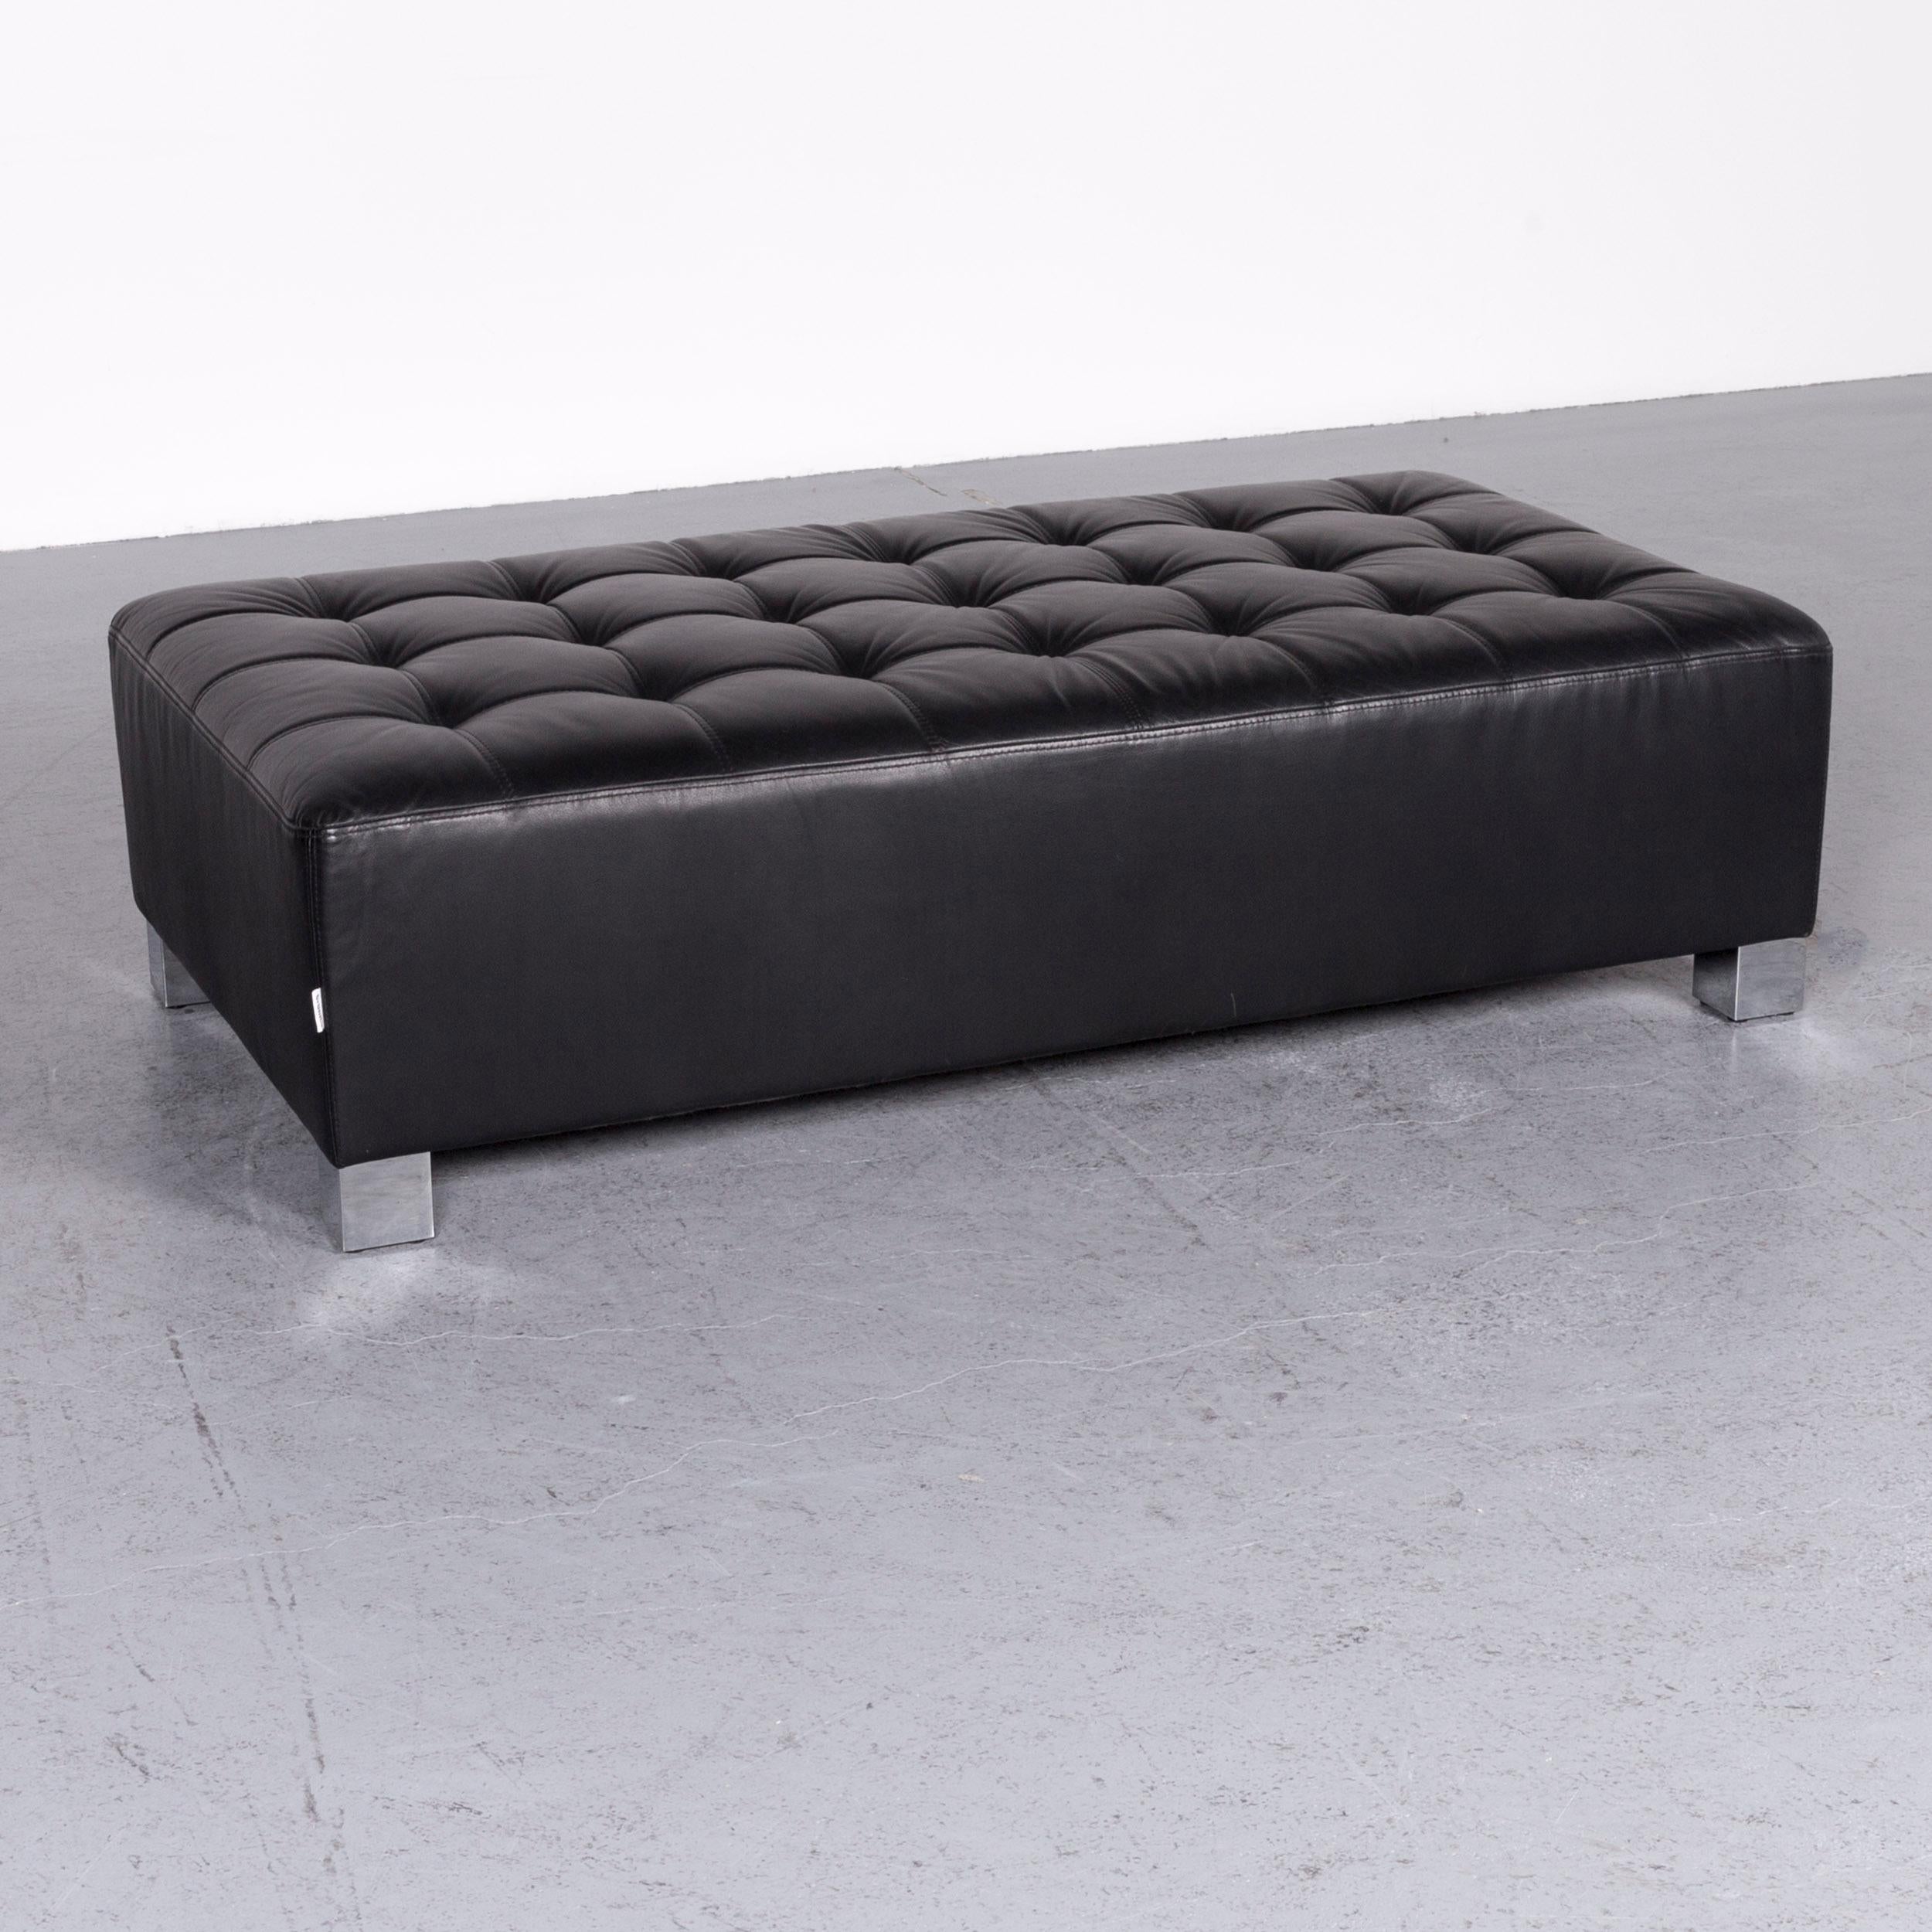 We bring to you a Brühl & Sippold Carrée designer leather footstool black.